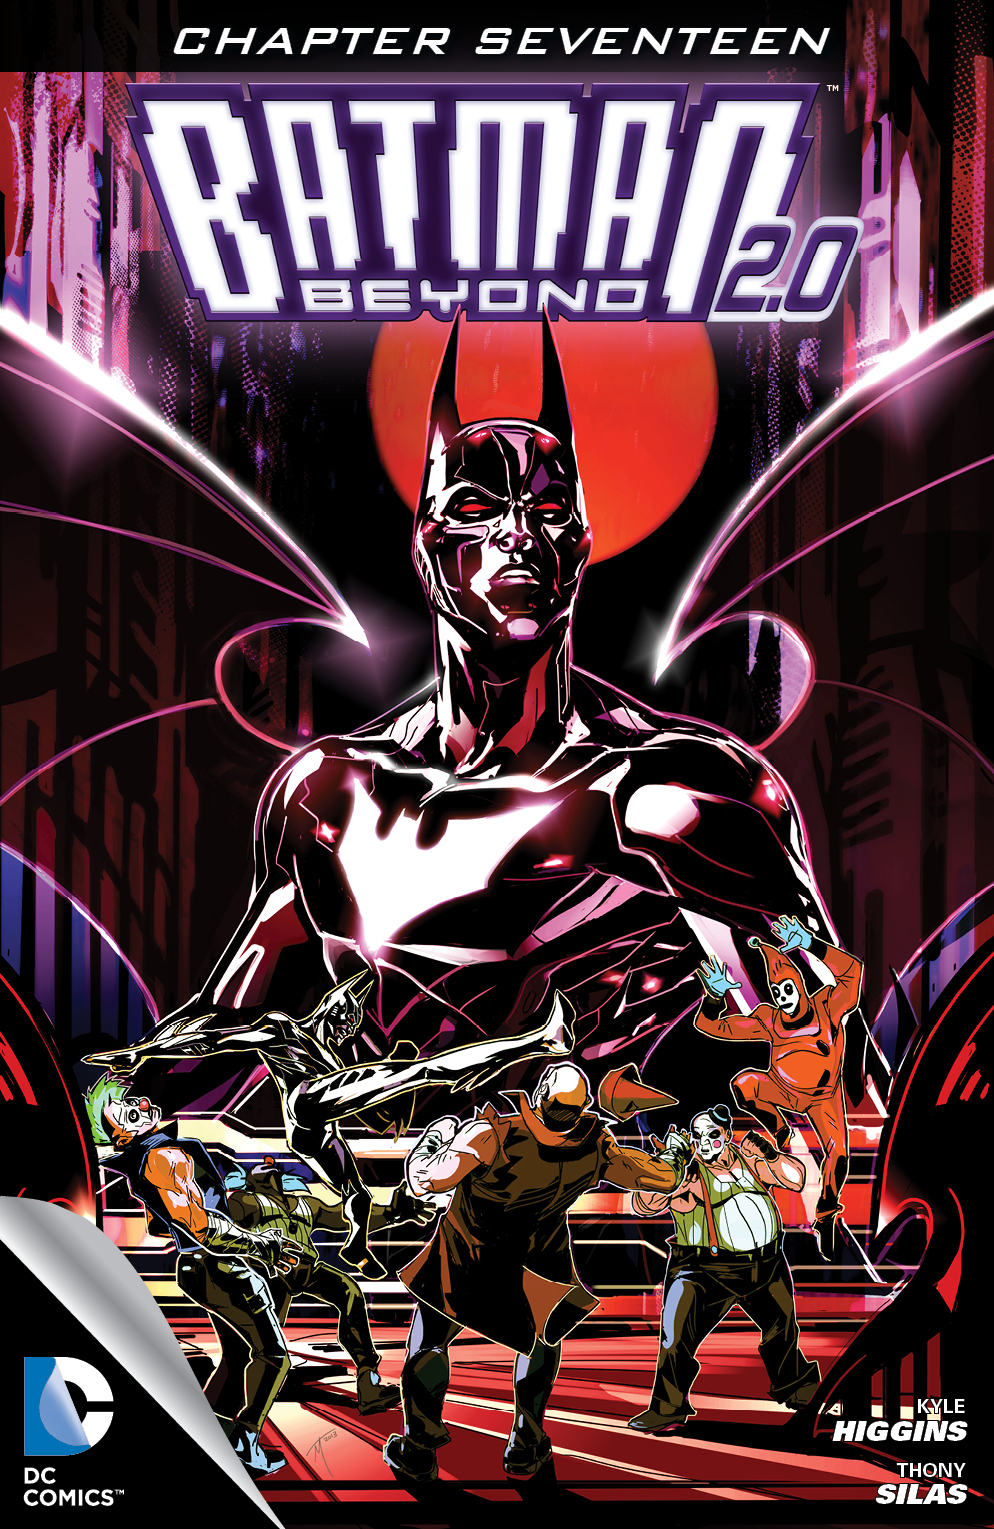 Batman Beyond 2.0 #17 preview images